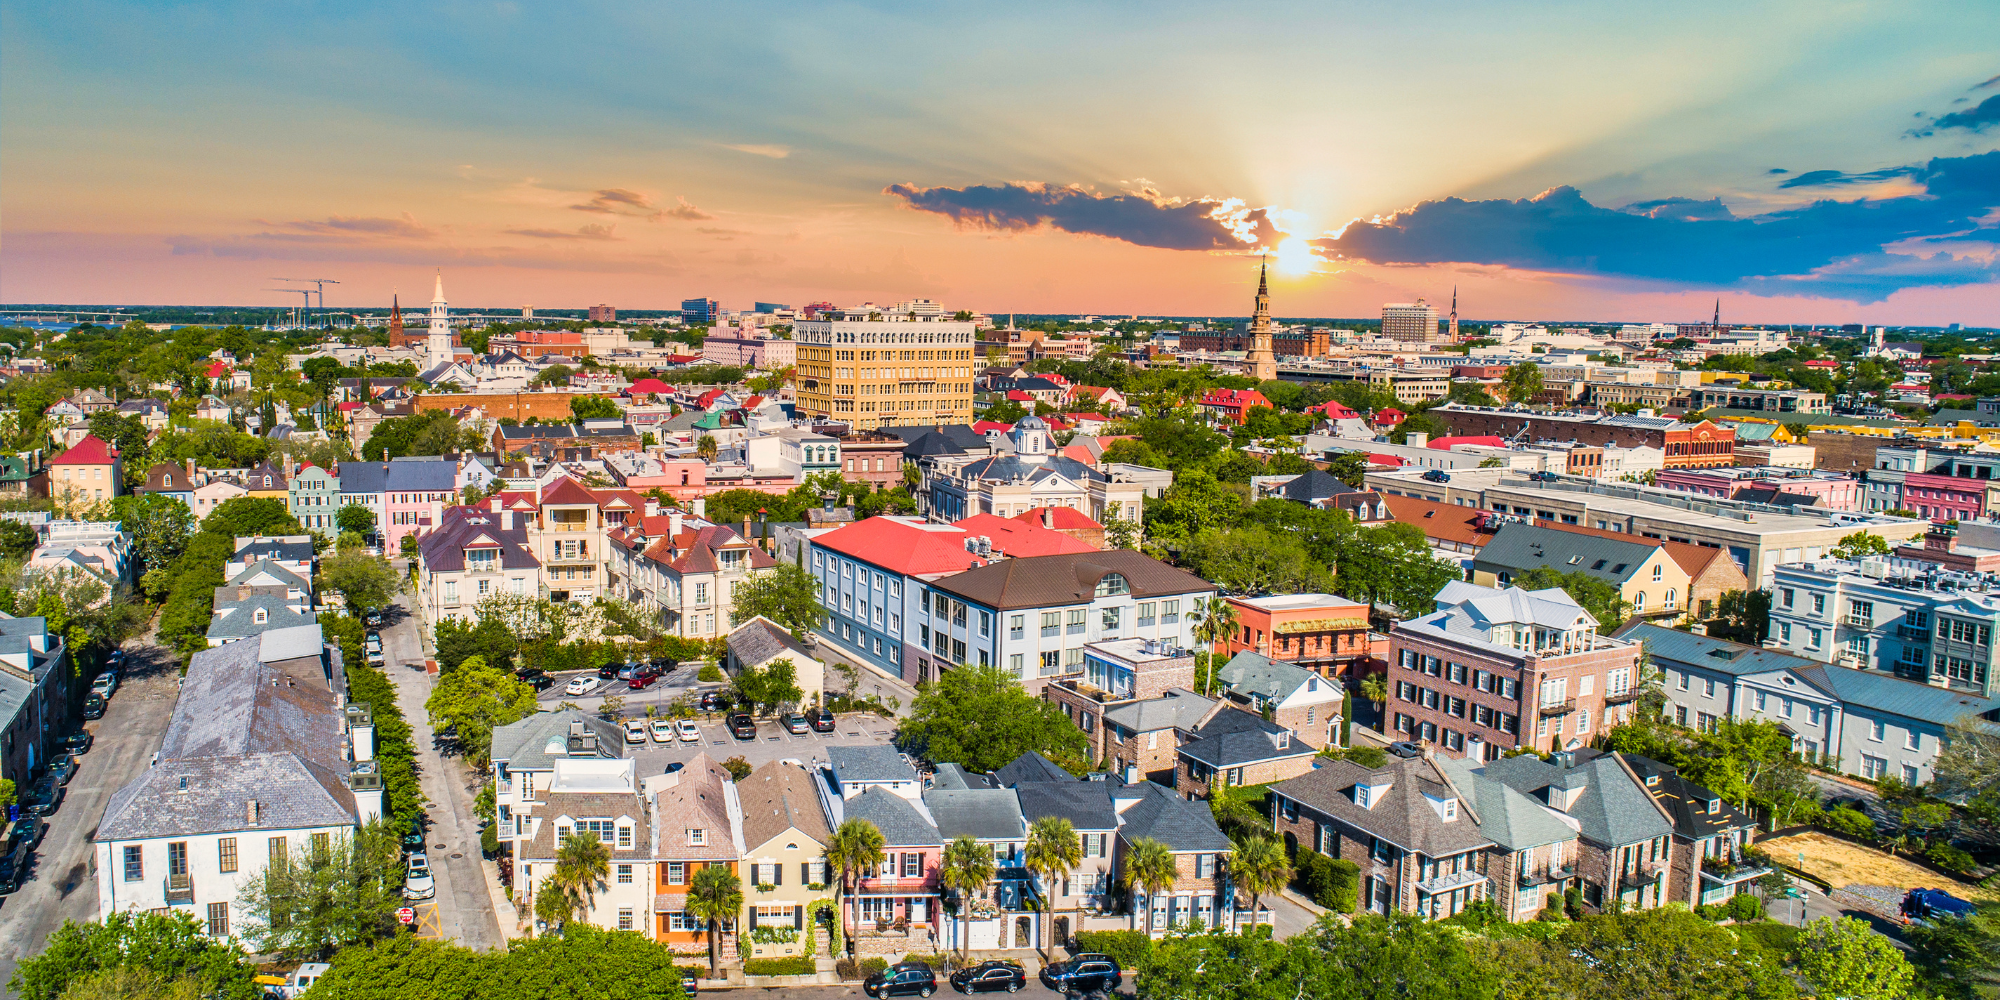 An Aerial view of Charleston, South Carolina